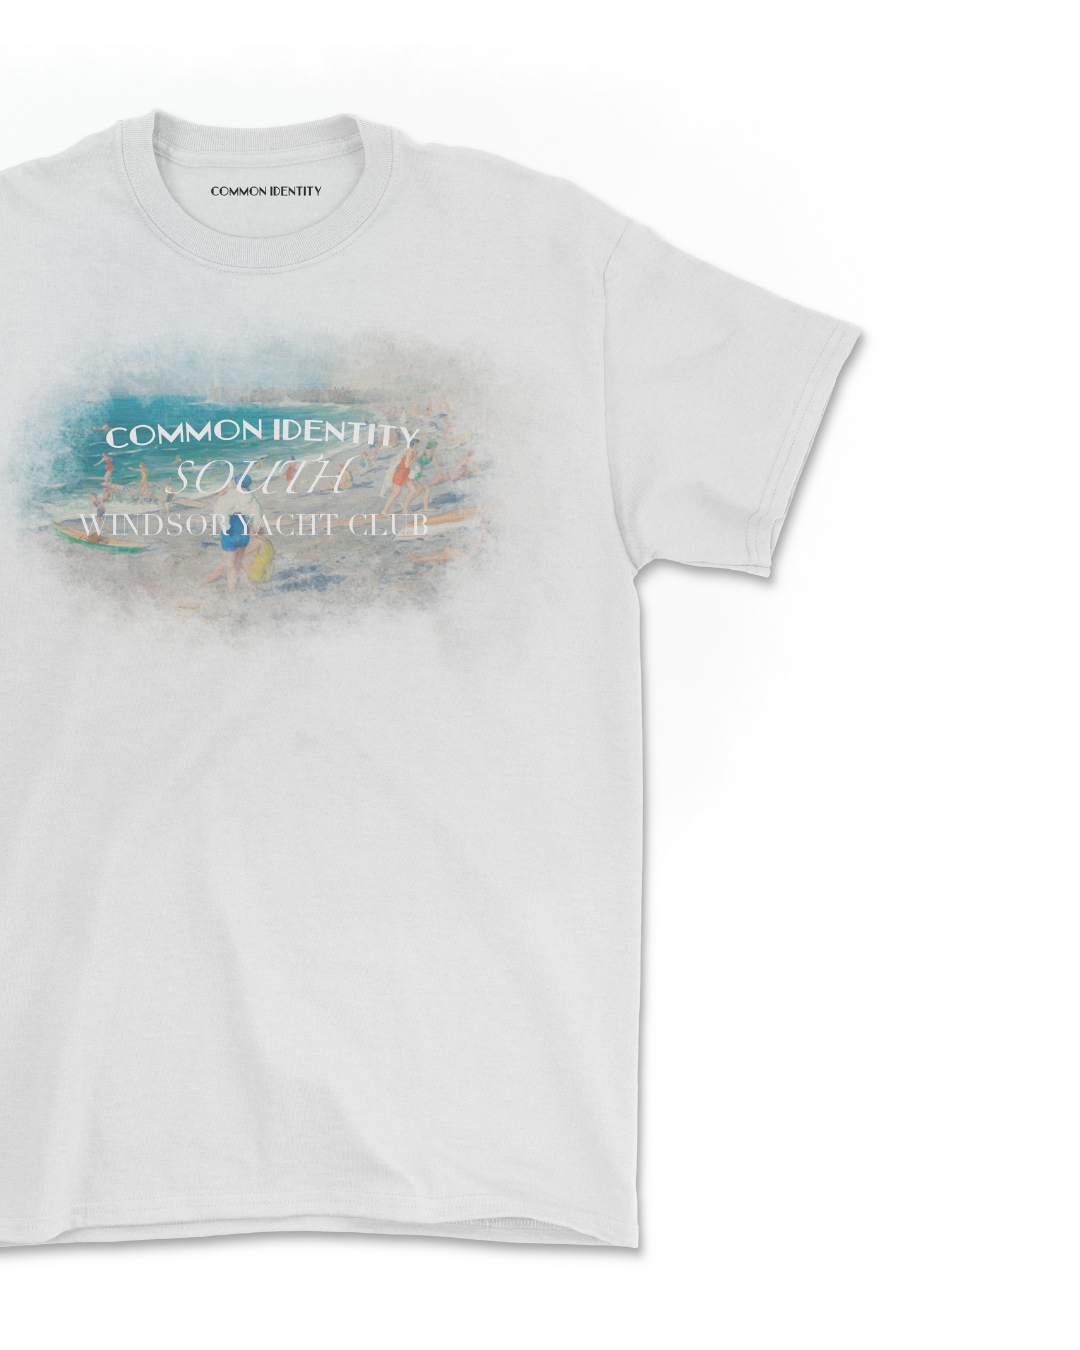 South Windsor Yacht Club- T-Shirt - Common Identity